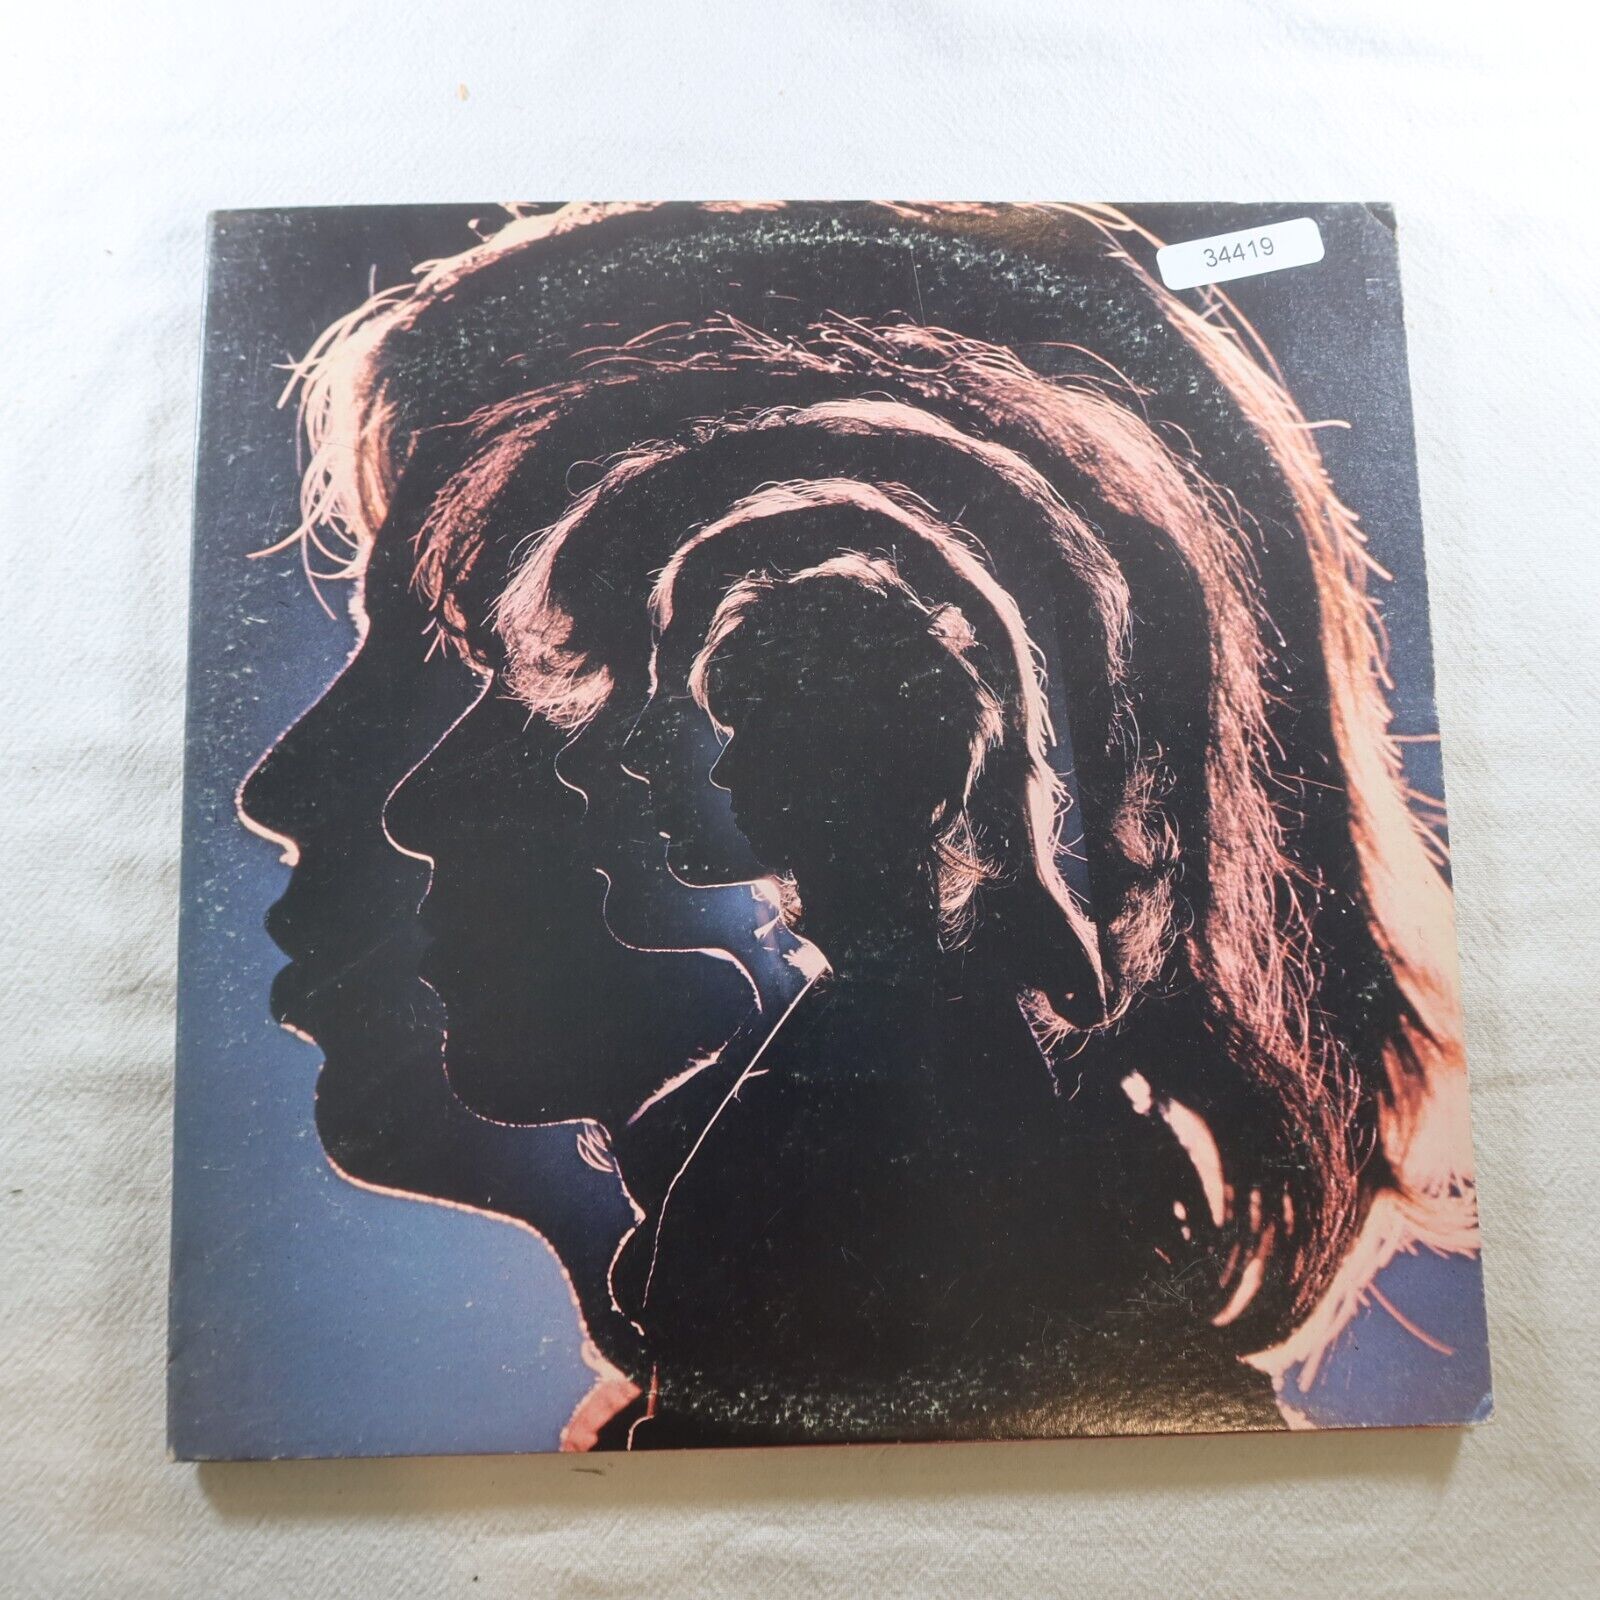 Rolling Stones Hot Rocks LONDON 11016 LP Vinyl Record Album